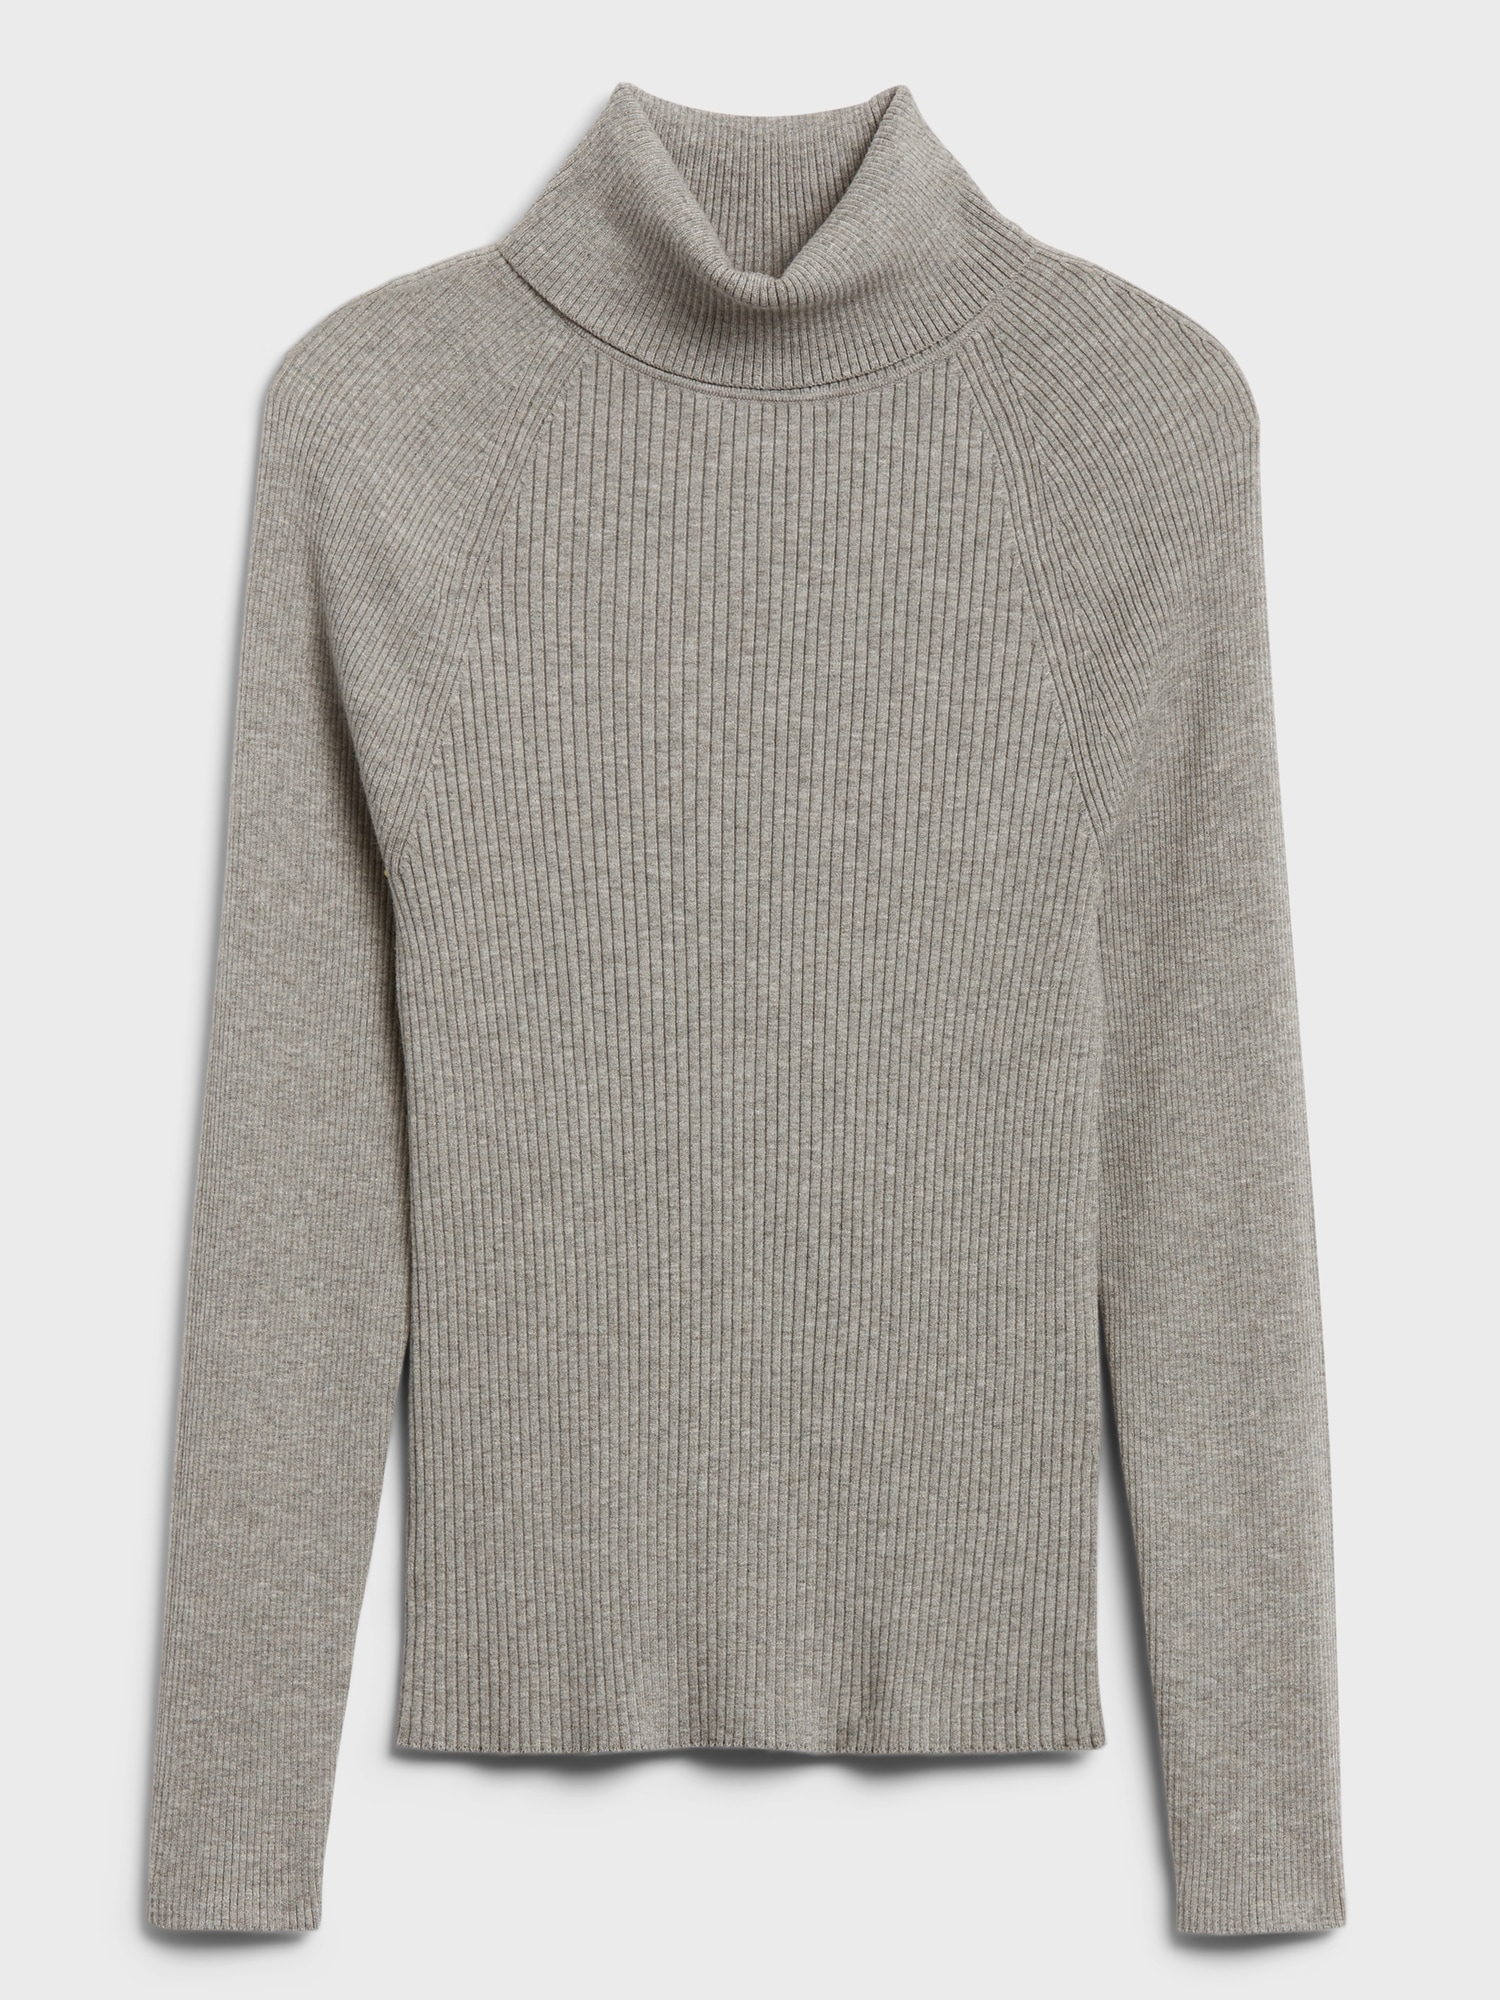 Mitico Turtleneck Sweater